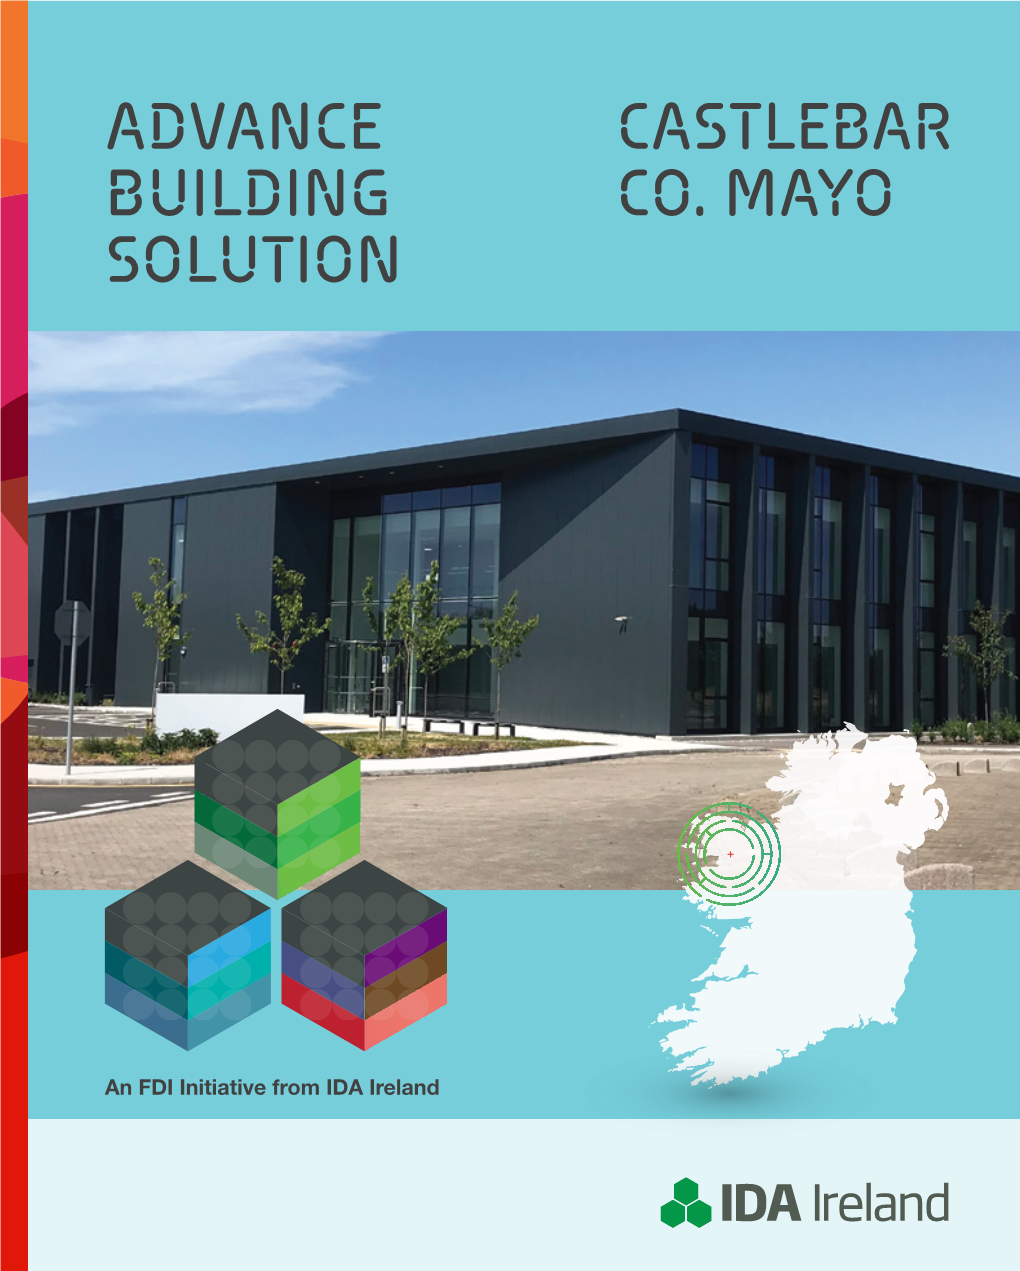 IDA Ireland’S Advanced Building Solution in Castlebar, Please Contact